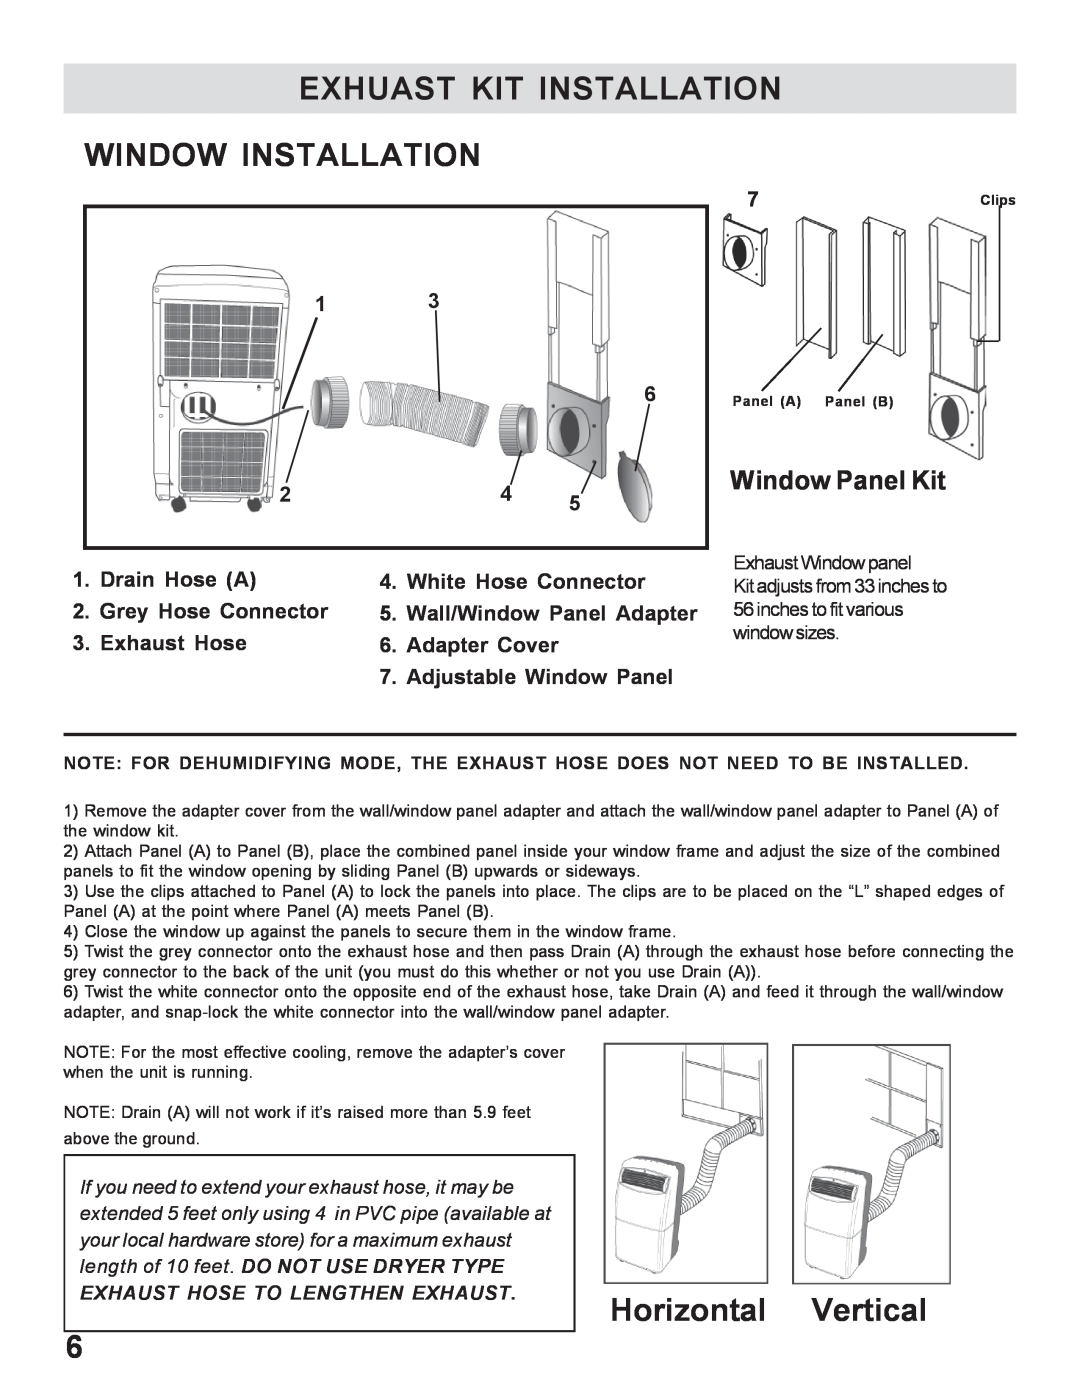 WindChaser Products PACR12 Exhuast Kit Installation, Window Installation, Horizontal Vertical, Window Panel Kit 